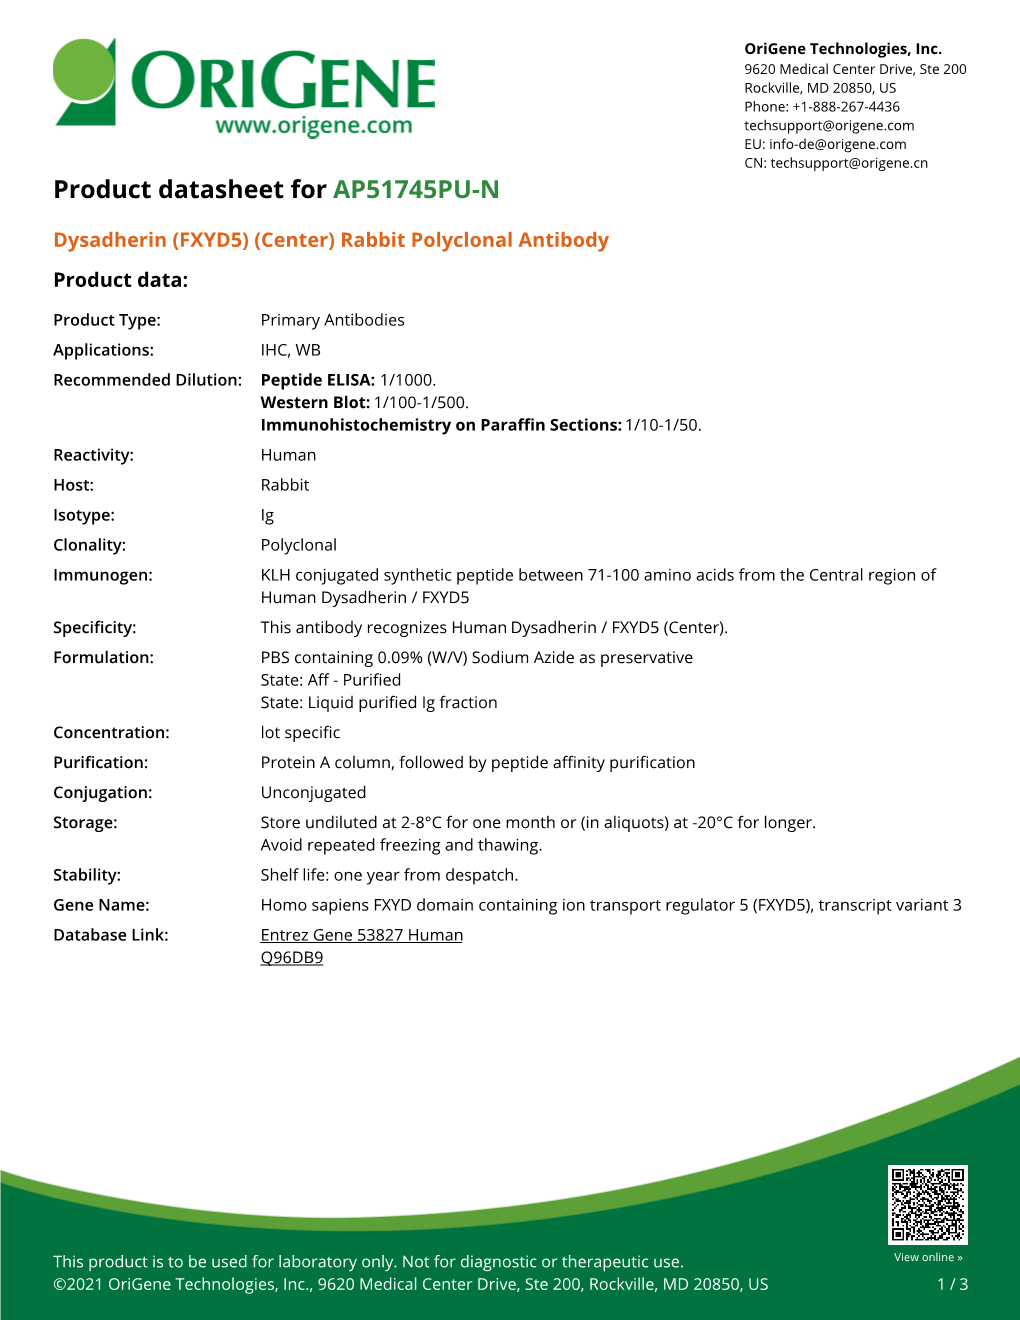 Dysadherin (FXYD5) (Center) Rabbit Polyclonal Antibody Product Data